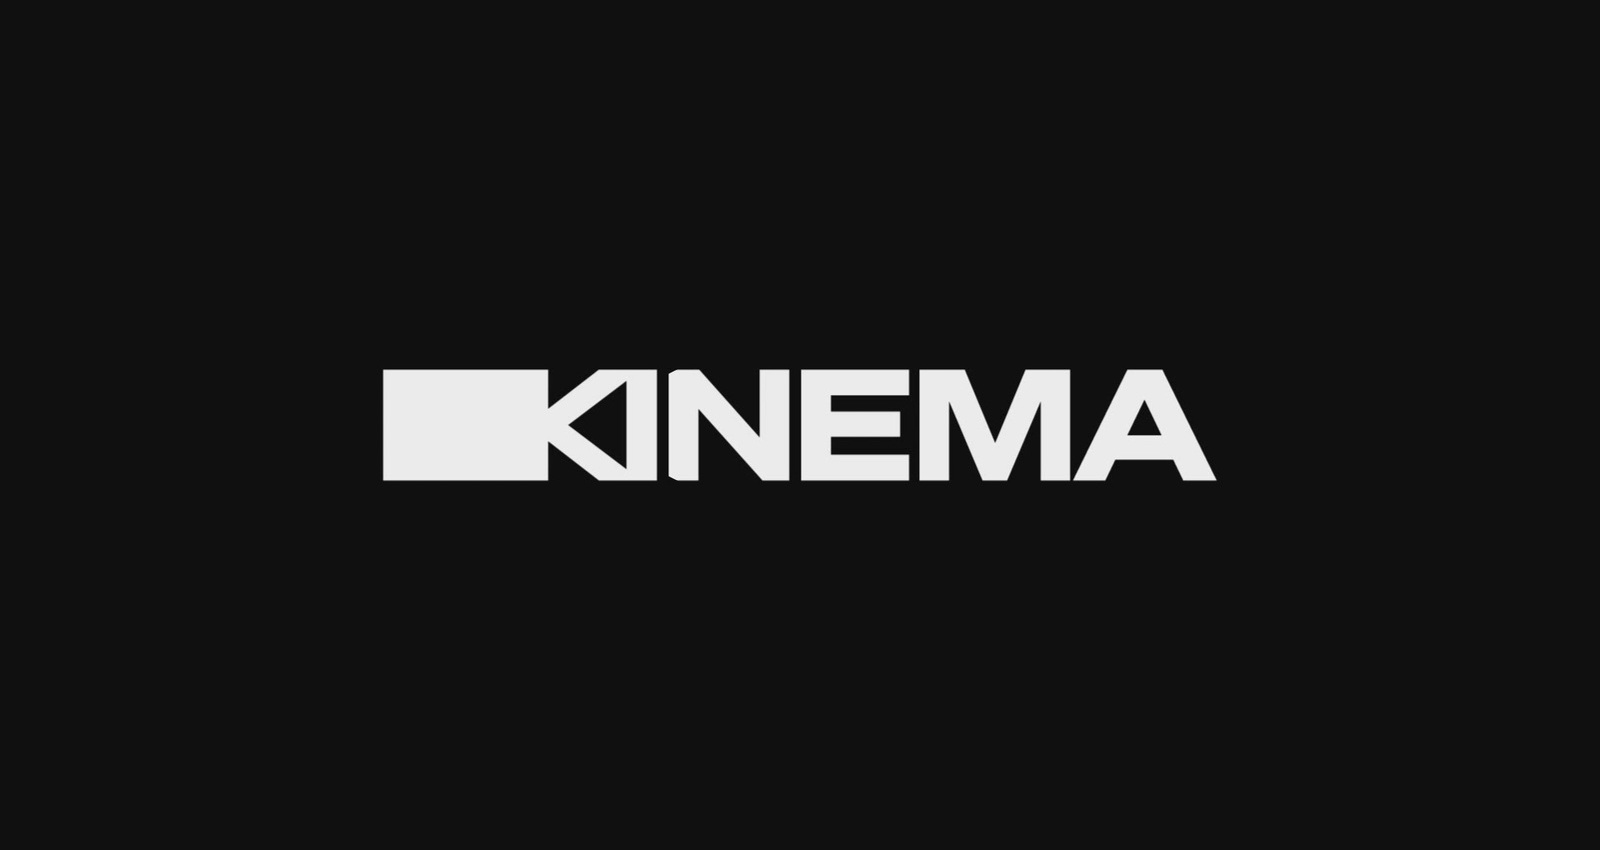 Kinema Logotype